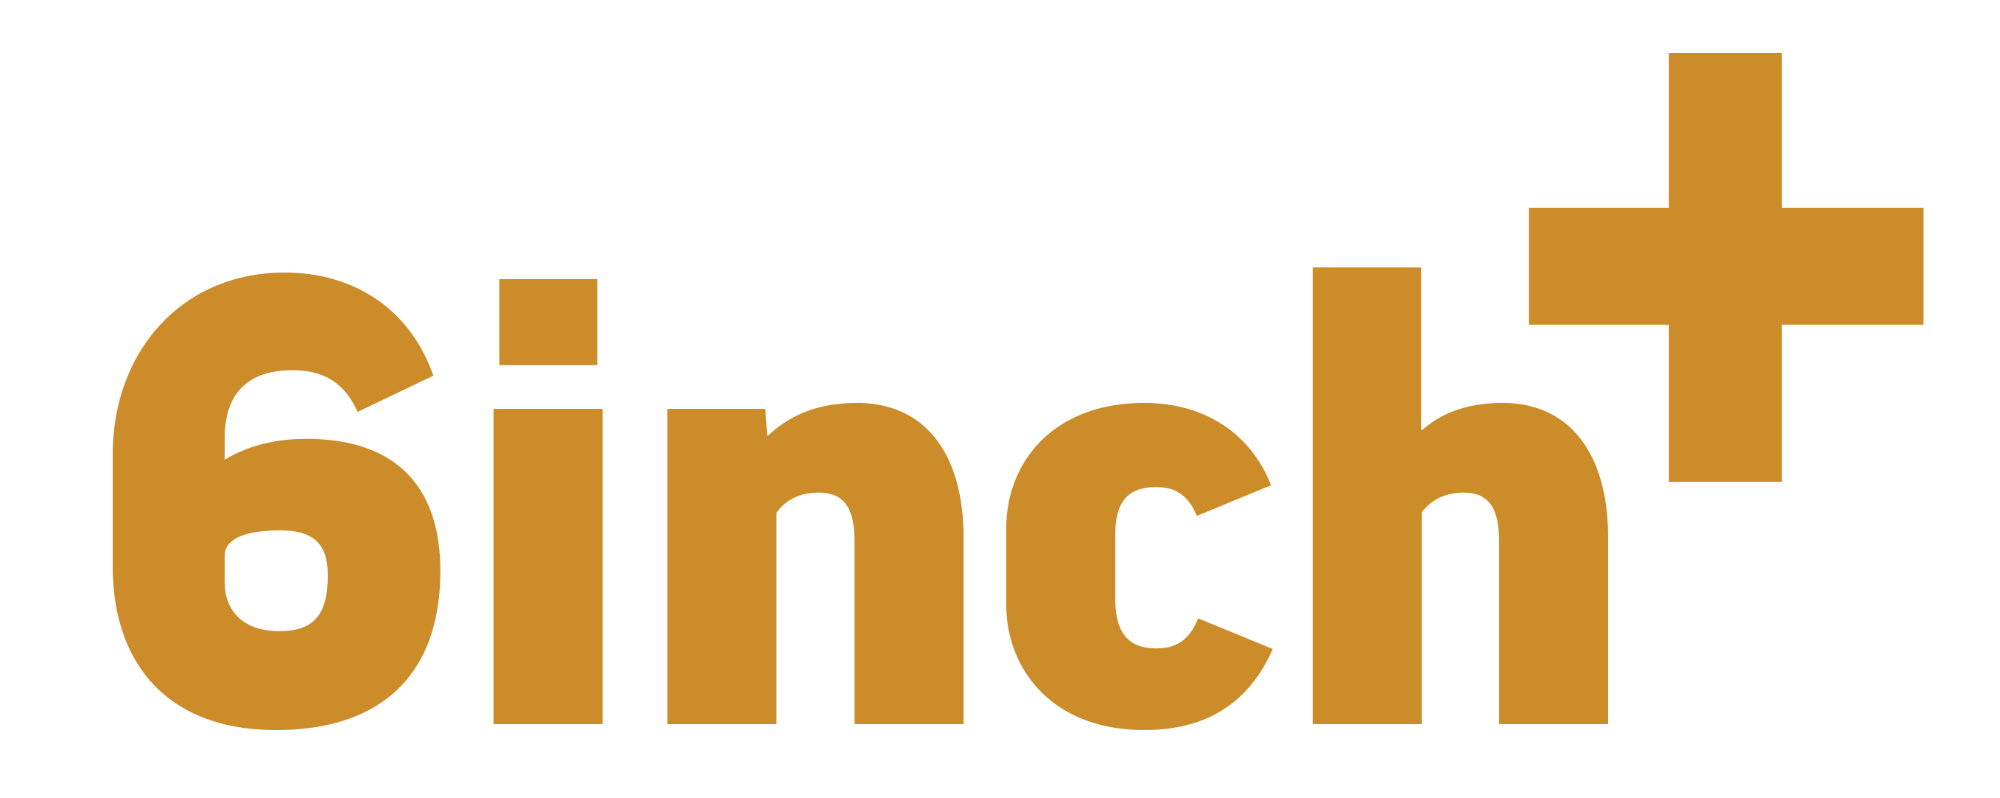 6inchplus